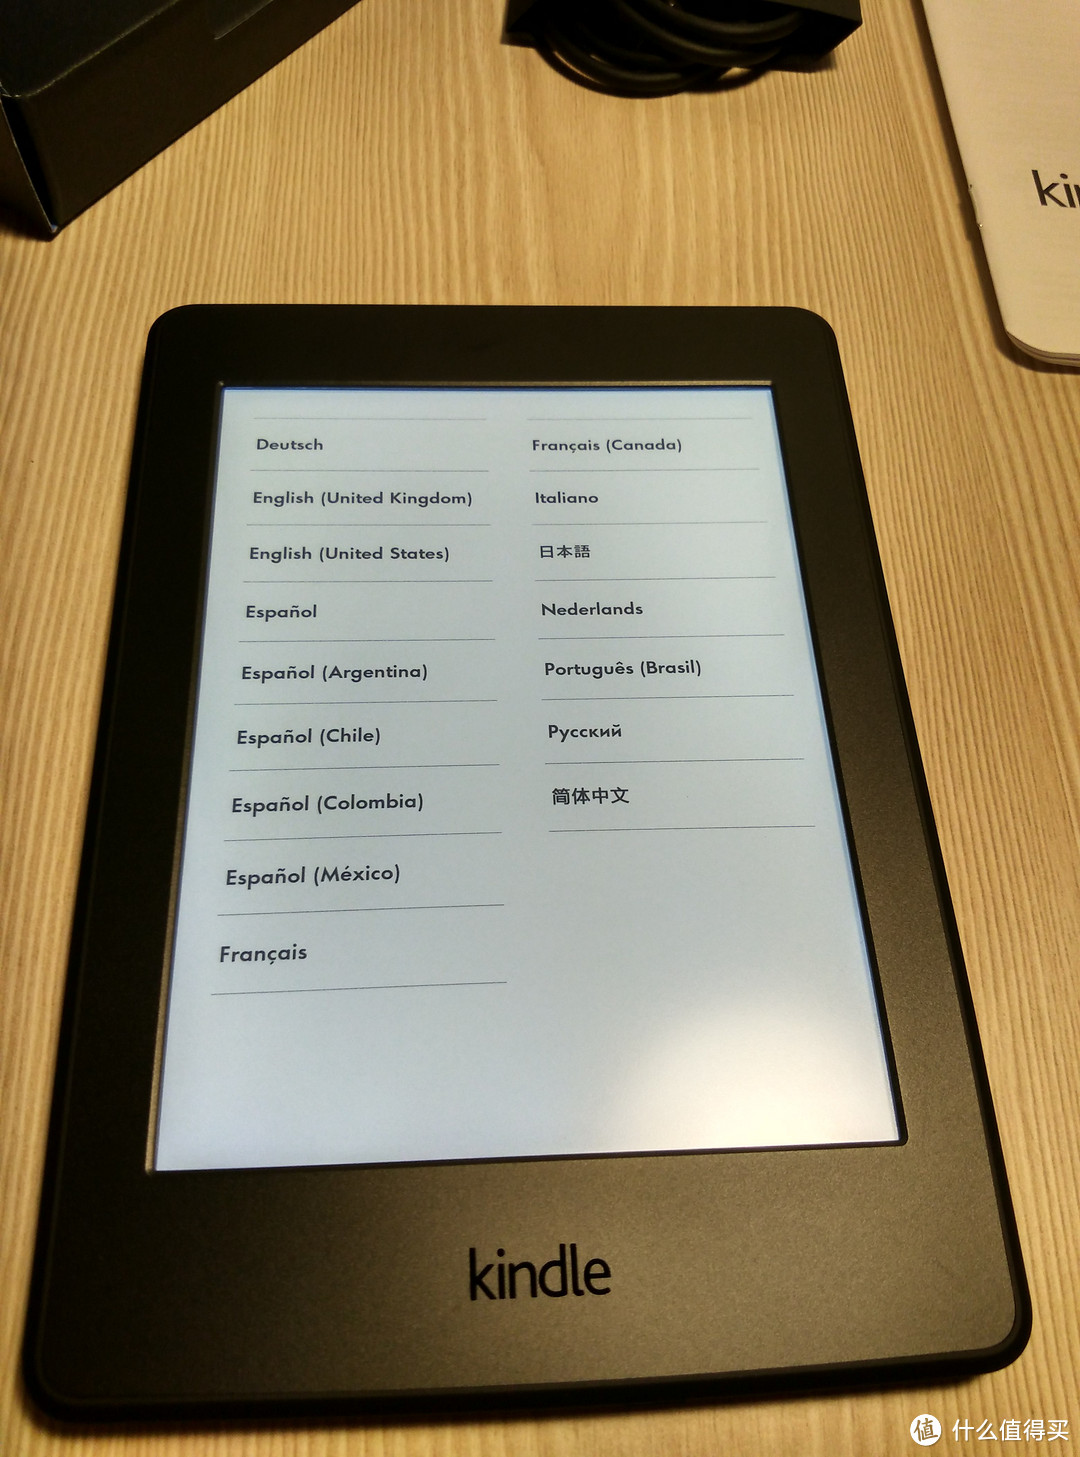 Kindle Paperwhite 3电子阅读器开箱晒物